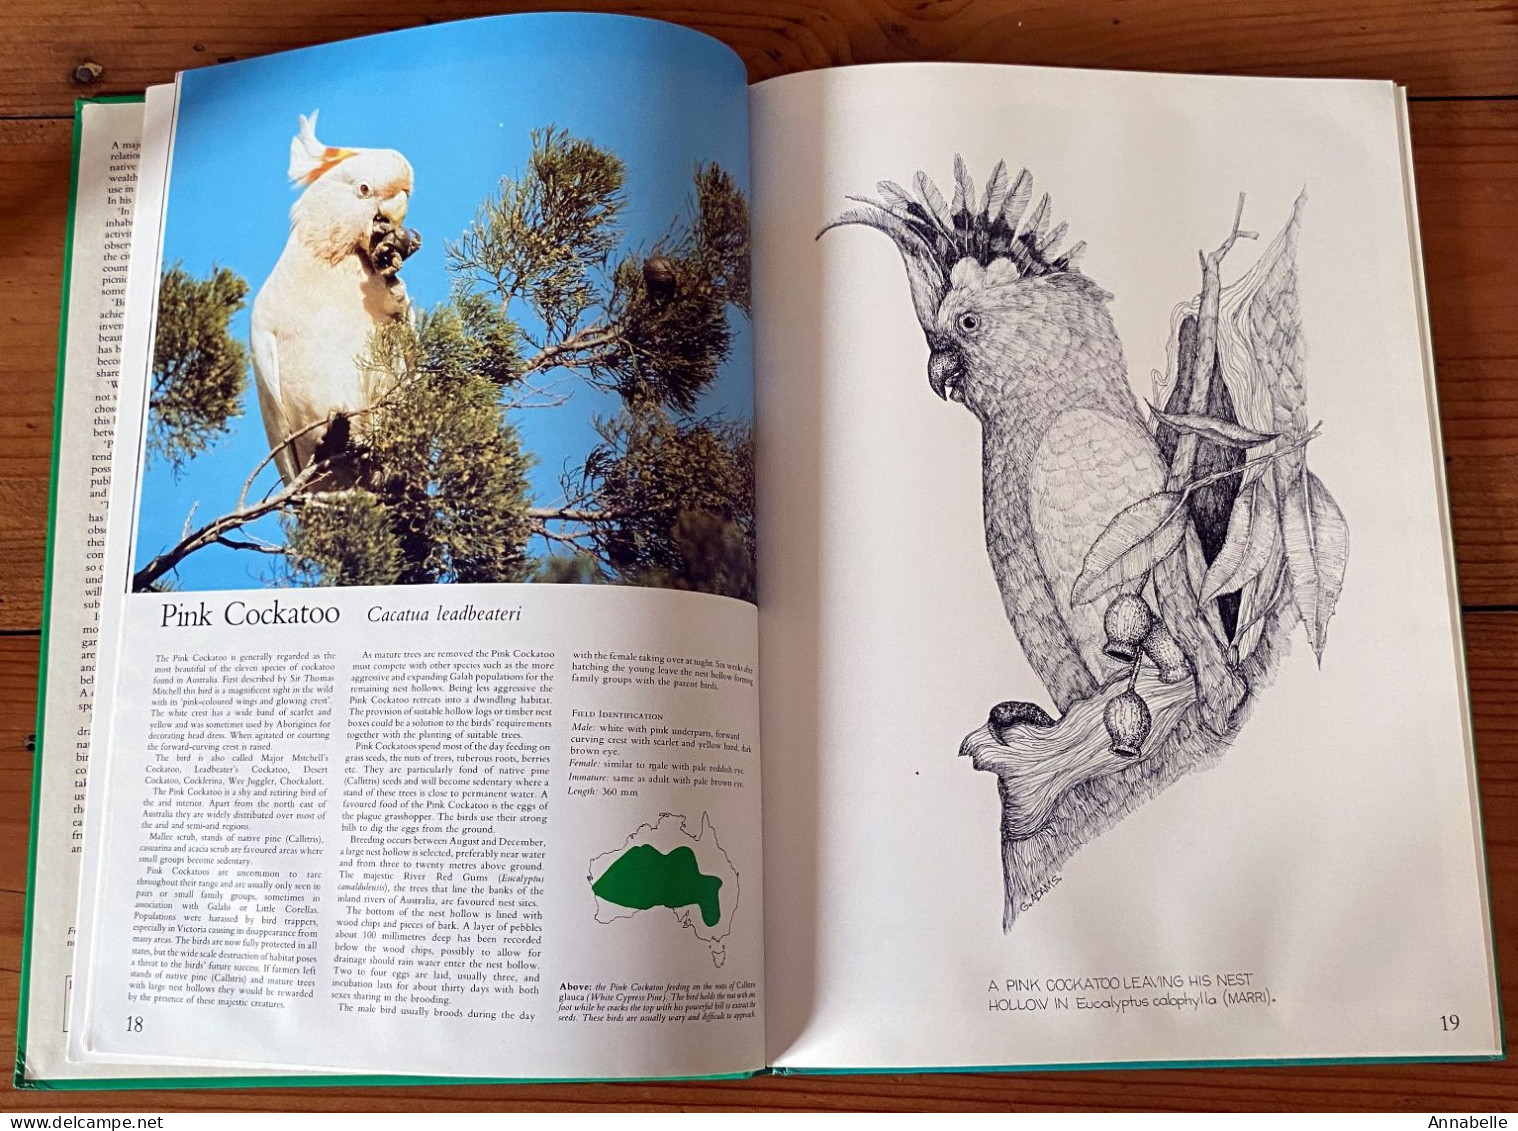 Foliage Birds : Australian Birds And Their Favoured Plants Par George Martin Adams (1981) Livre En Anglais - Dieren